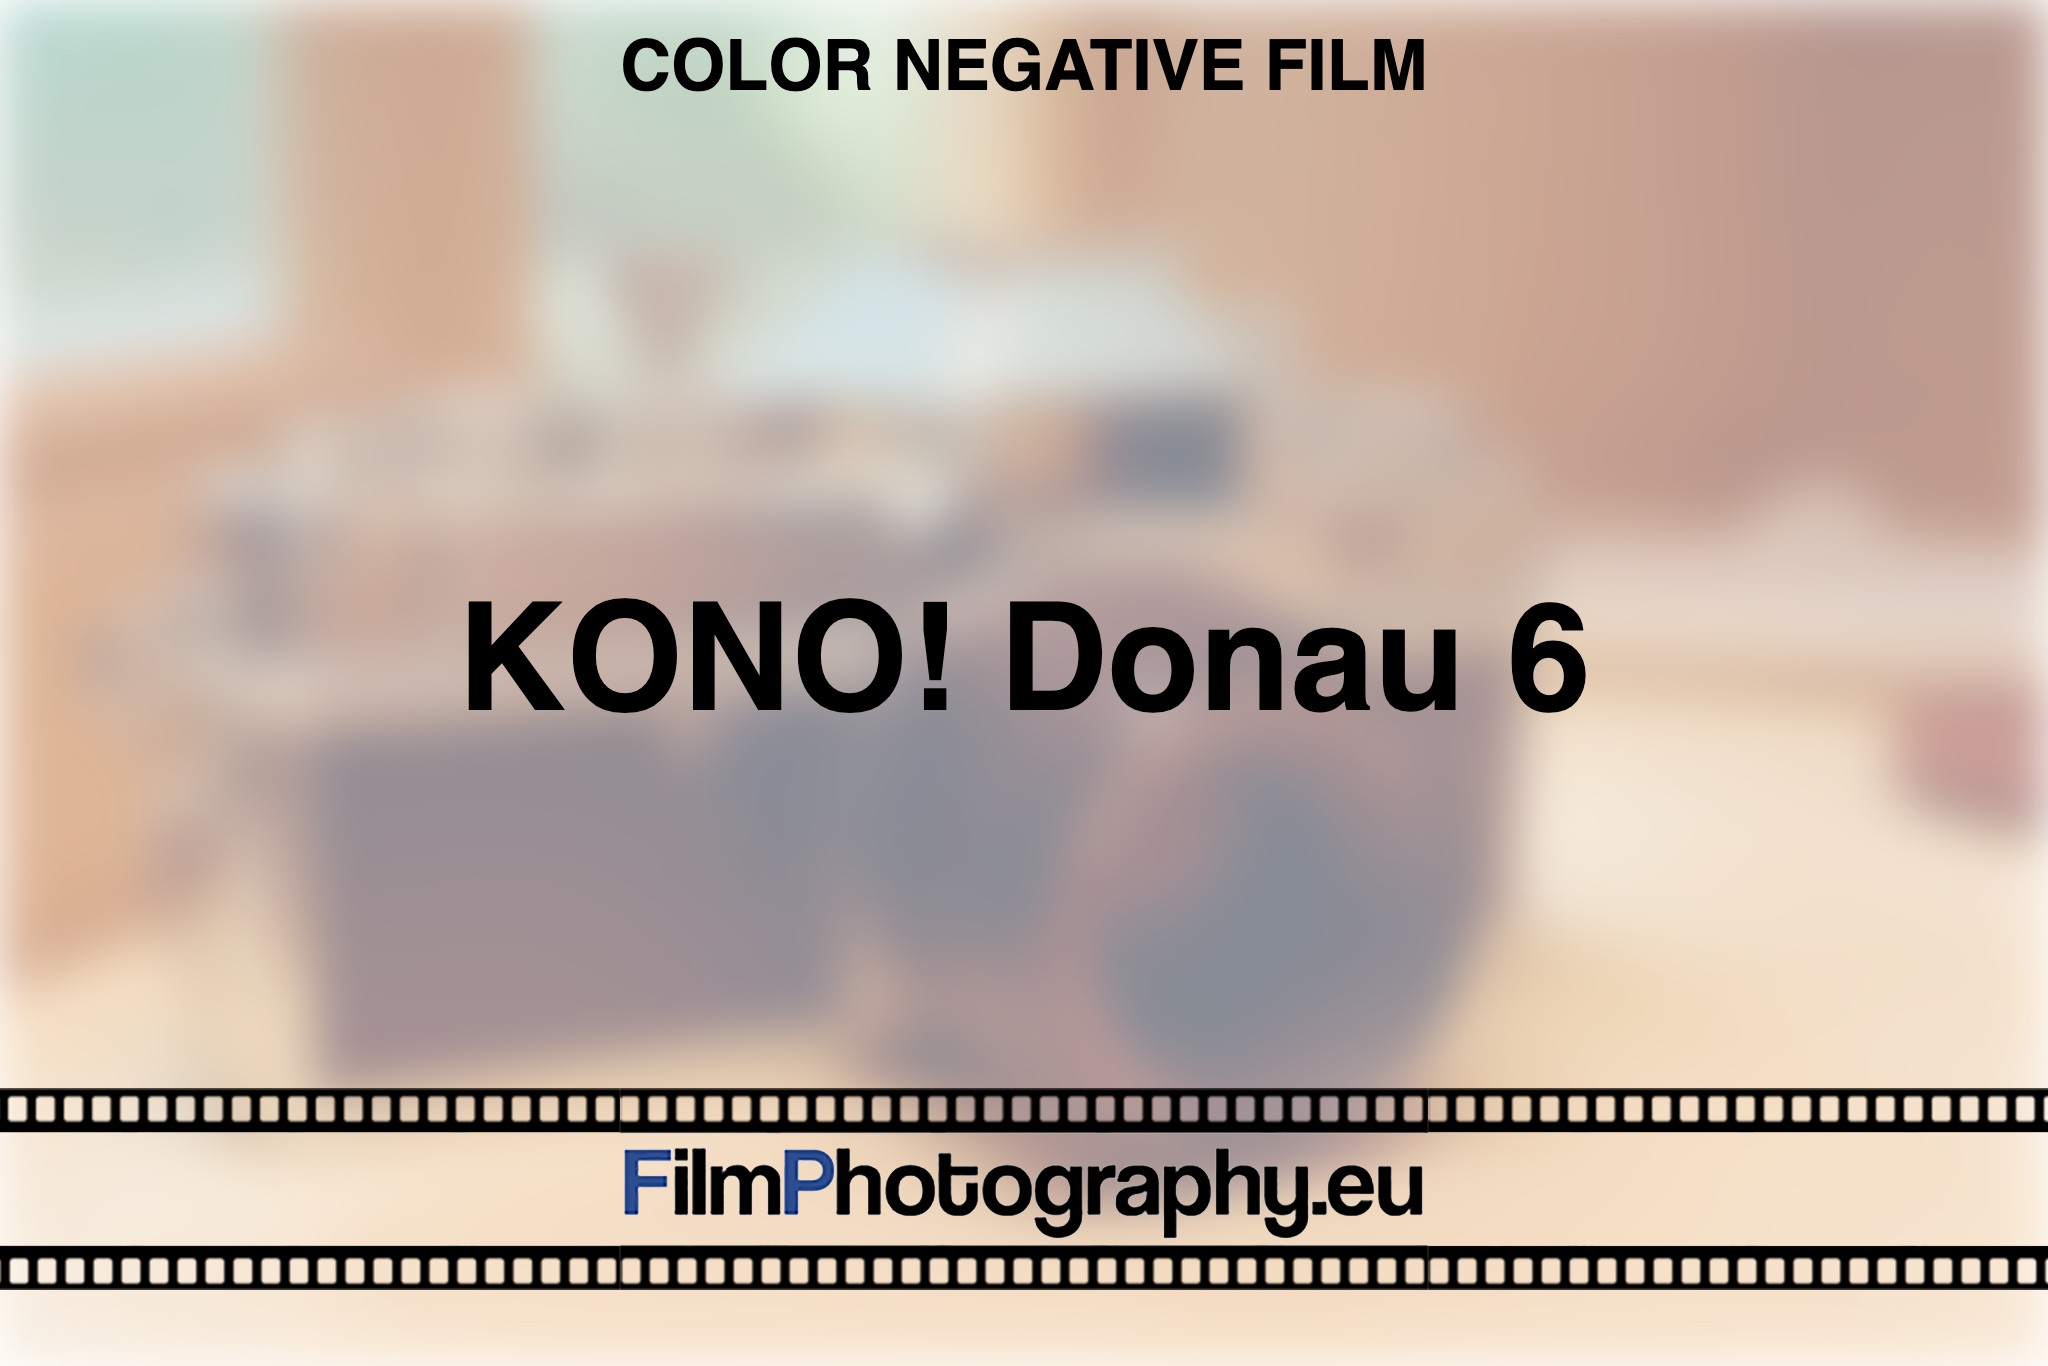 kono-donau-6-color-negative-film-bnv